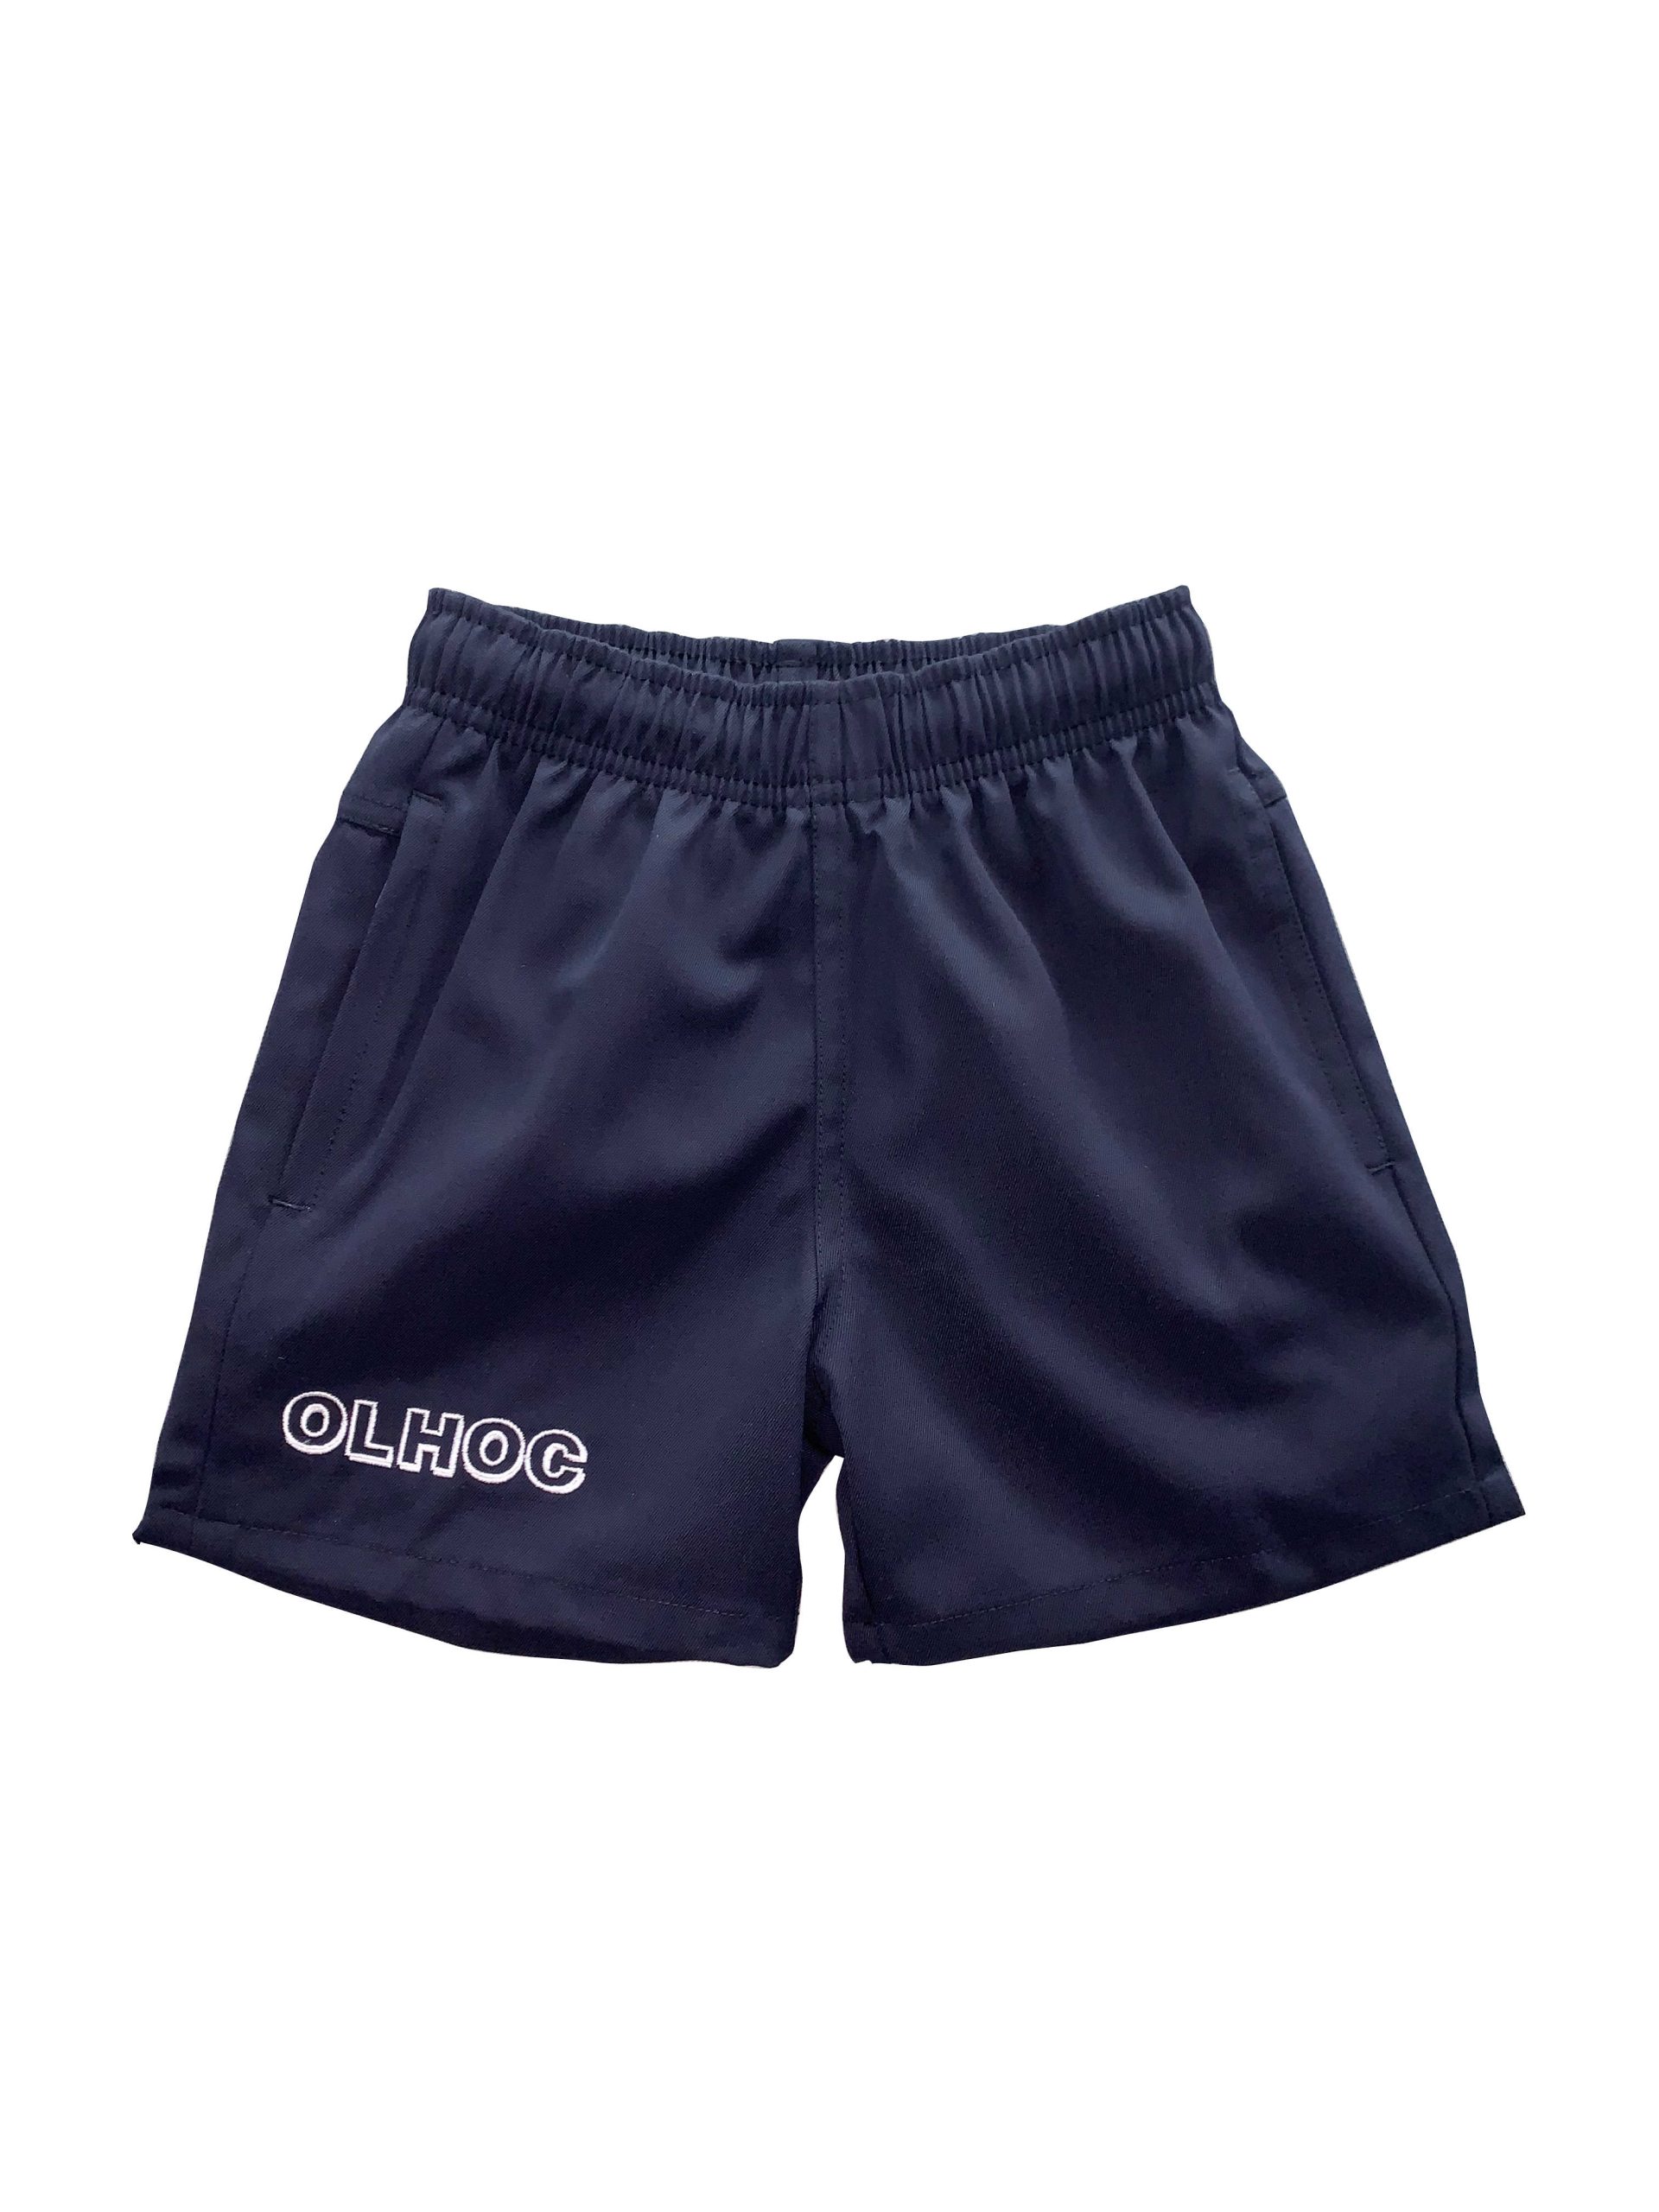 OLHOC Formal Shorts - Uniform Link